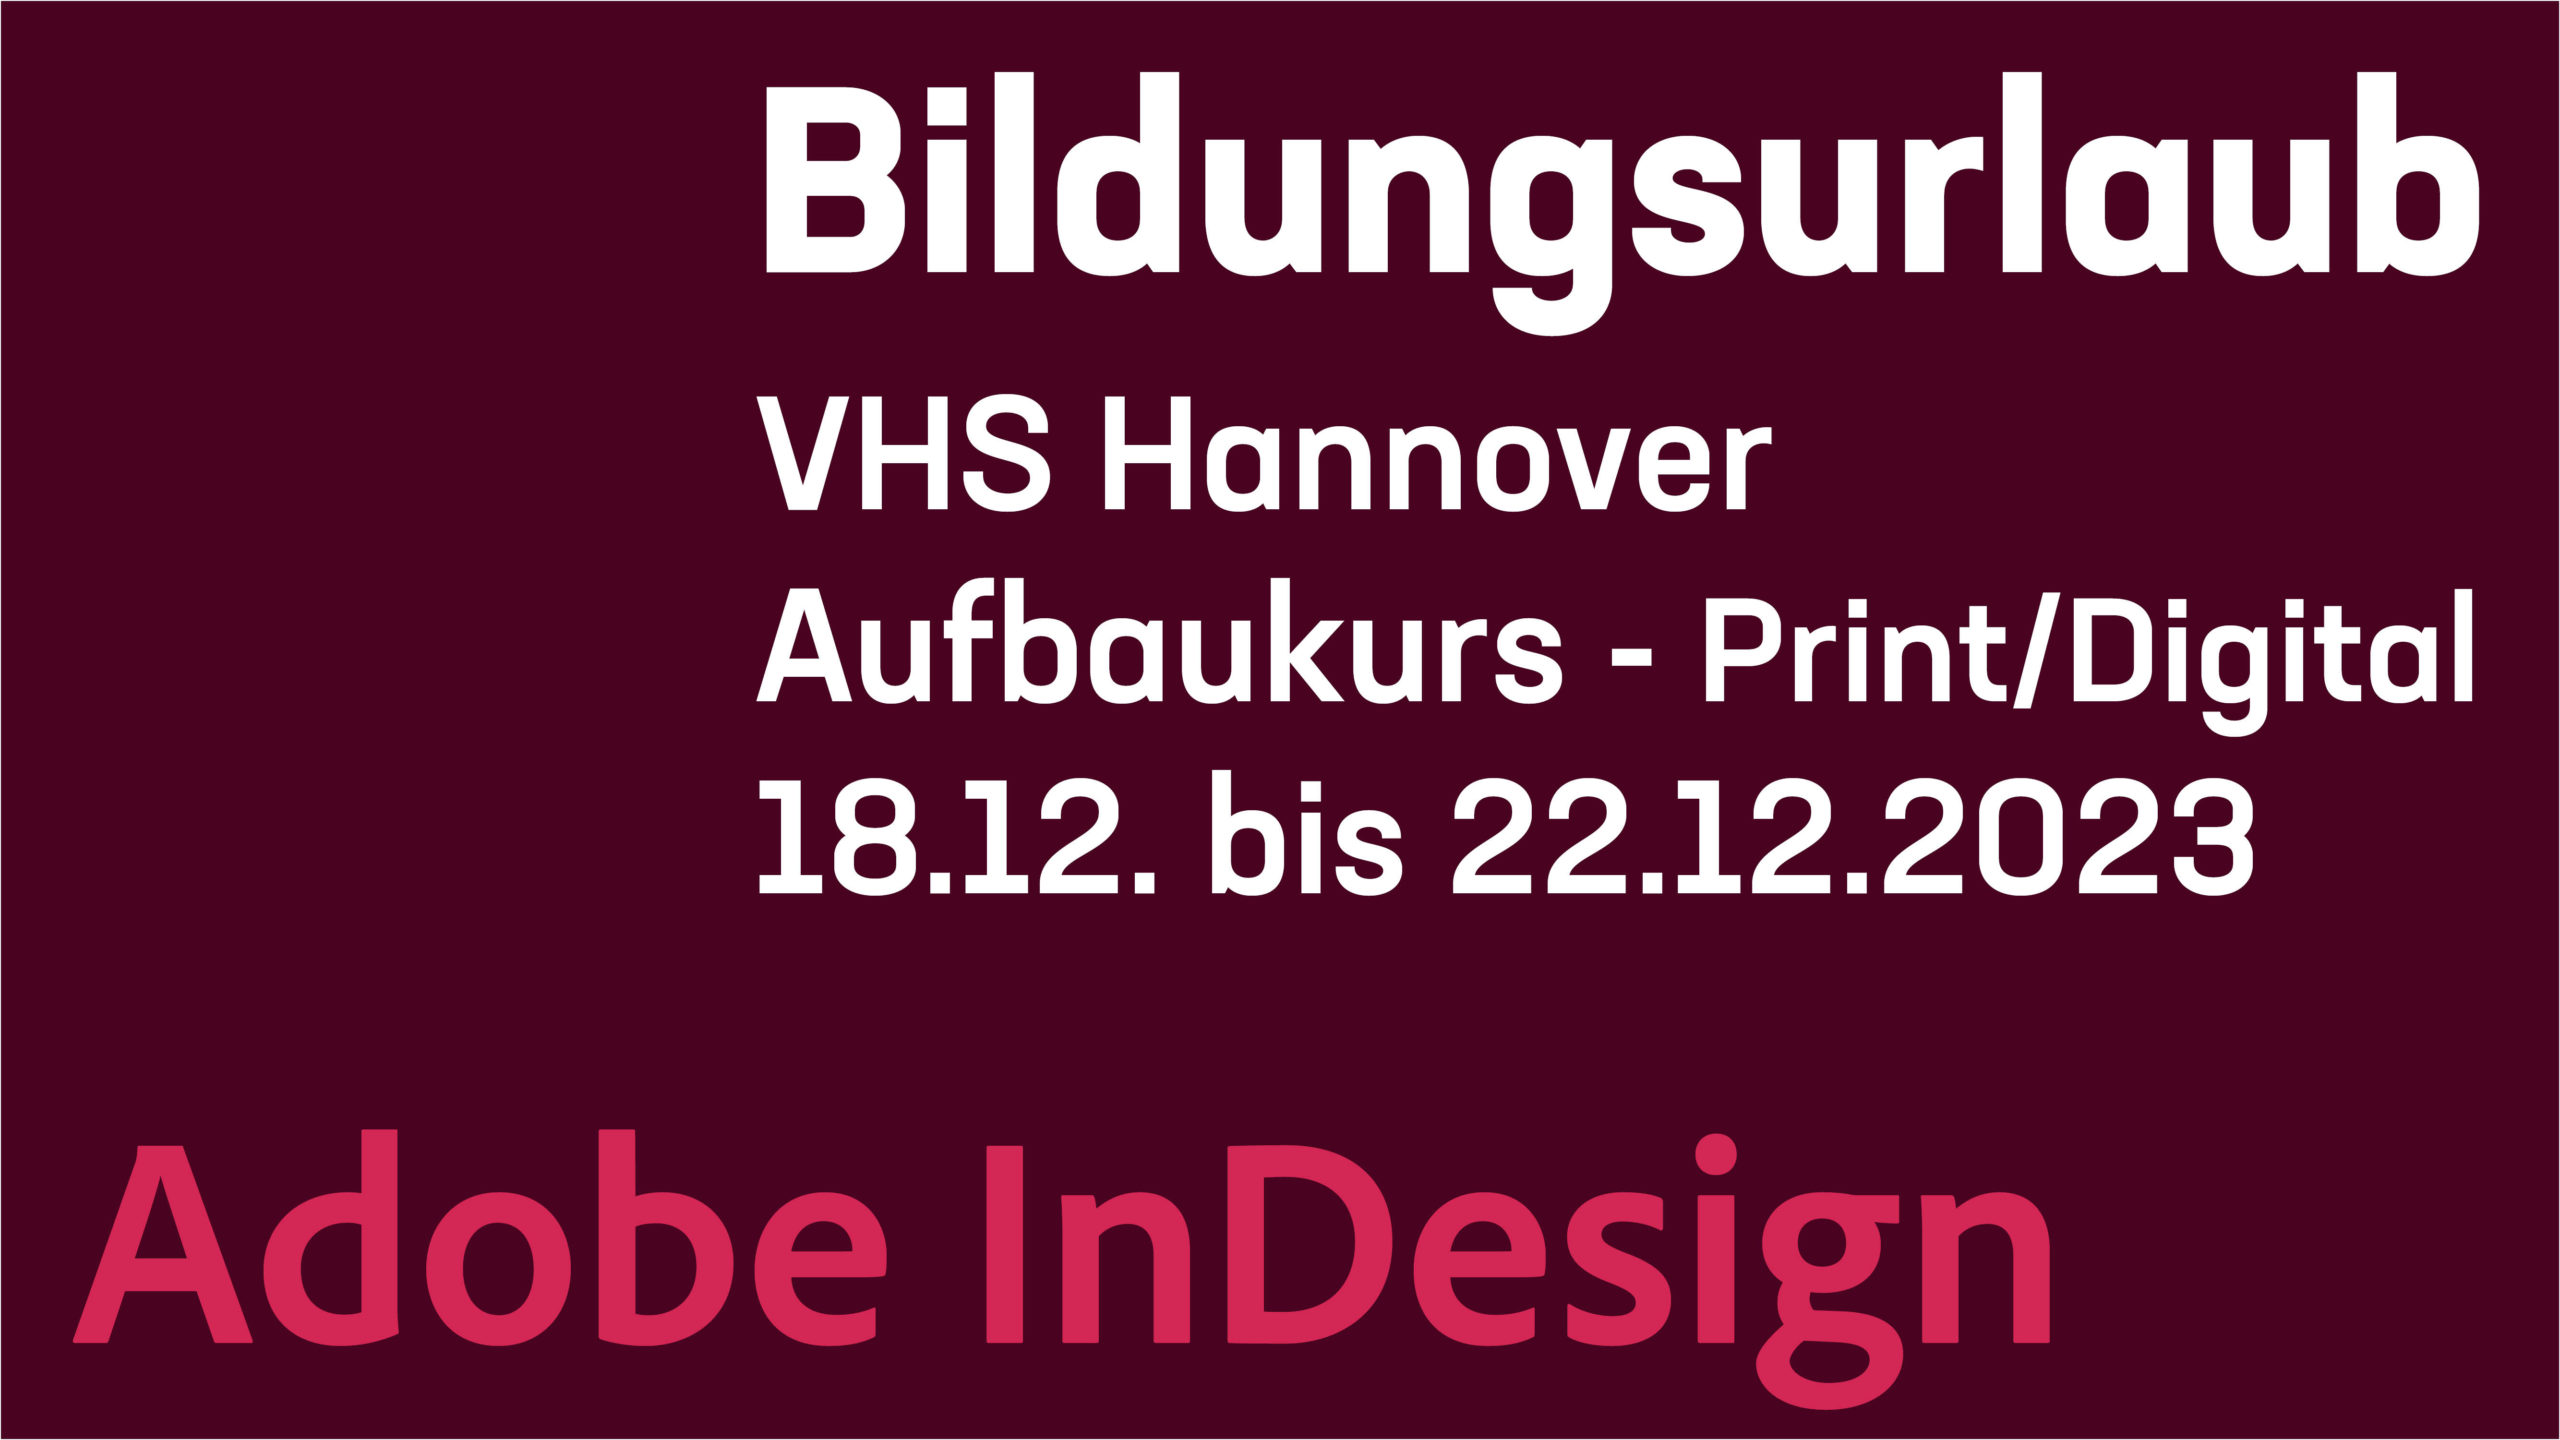 Adobe InDesign - Bildungsurlaub - Aufbau Print & Digital - VHS Hannover - 18.12.2023